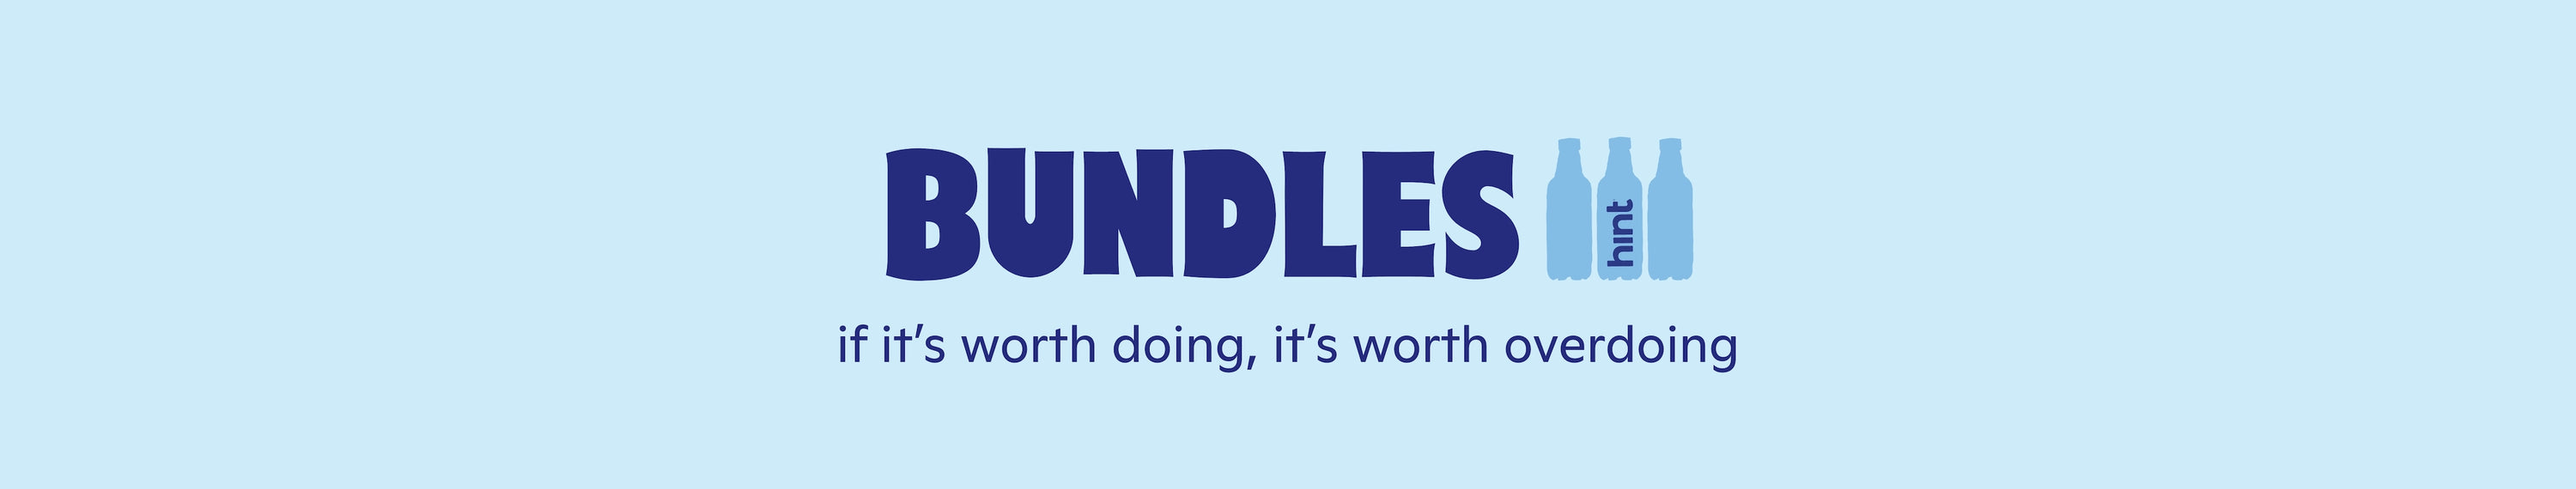 Bundles - NEW UX